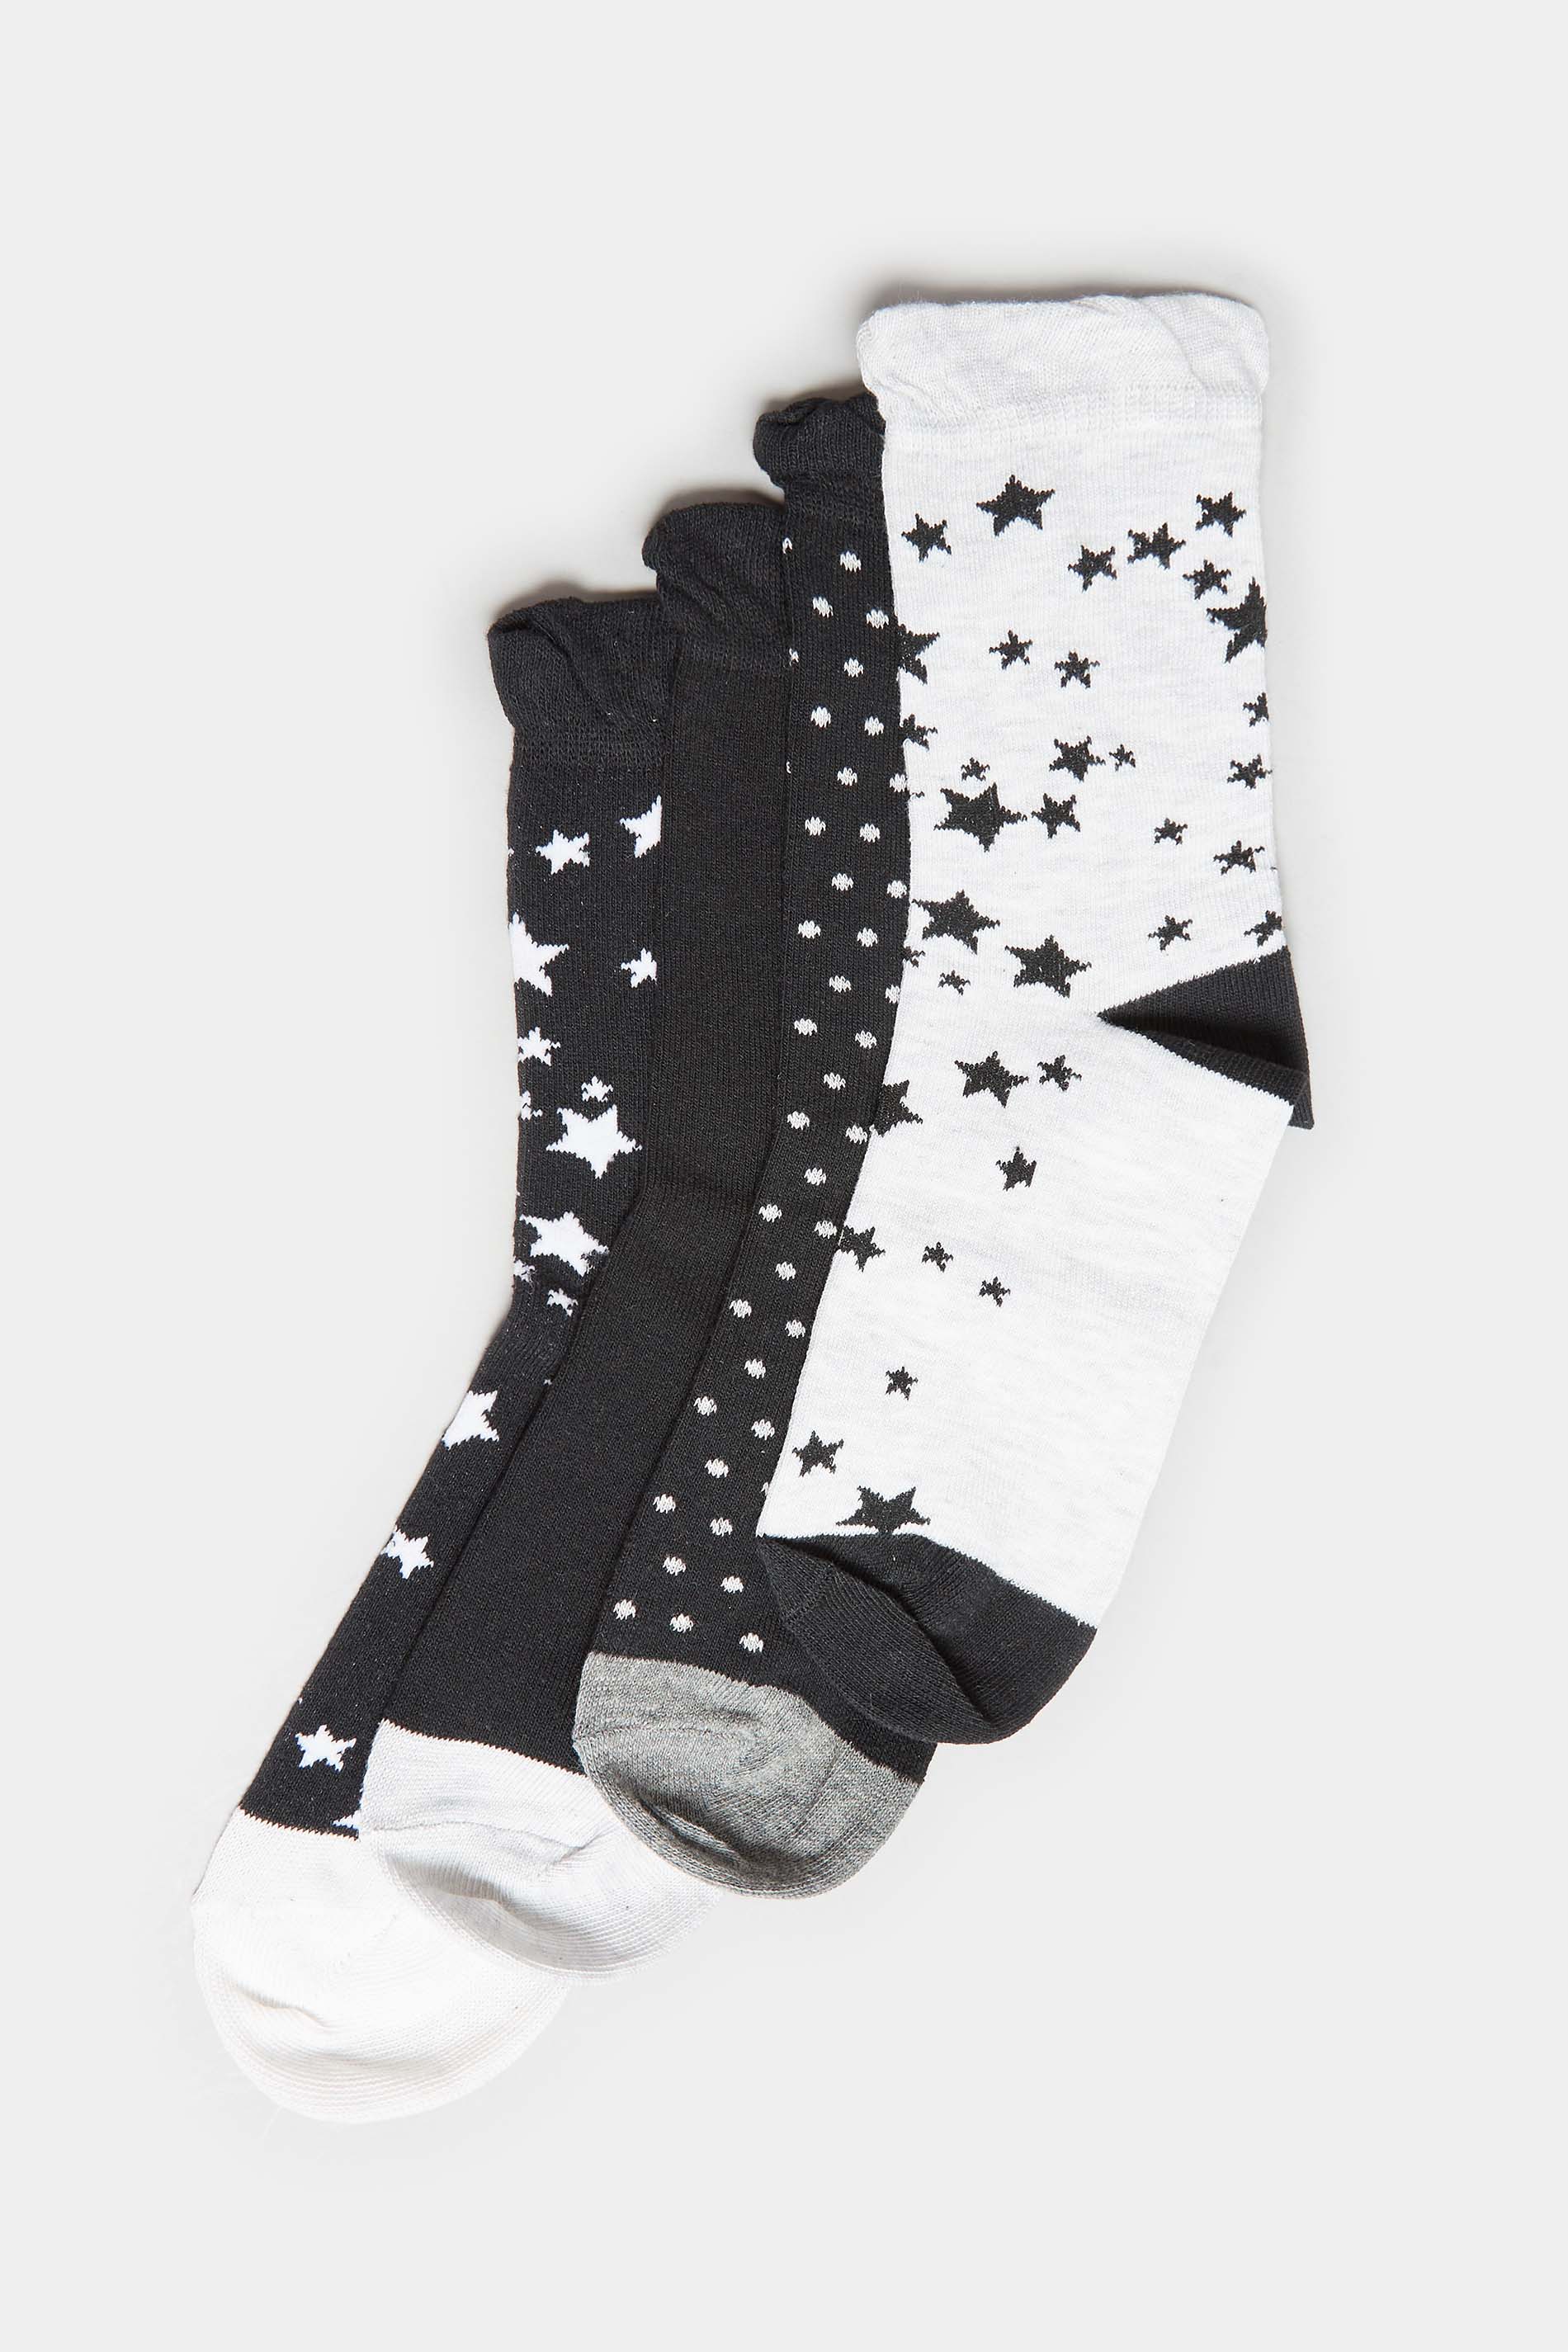 4 PACK Black & White Star Print Ankle Socks | Yours Clothing 3